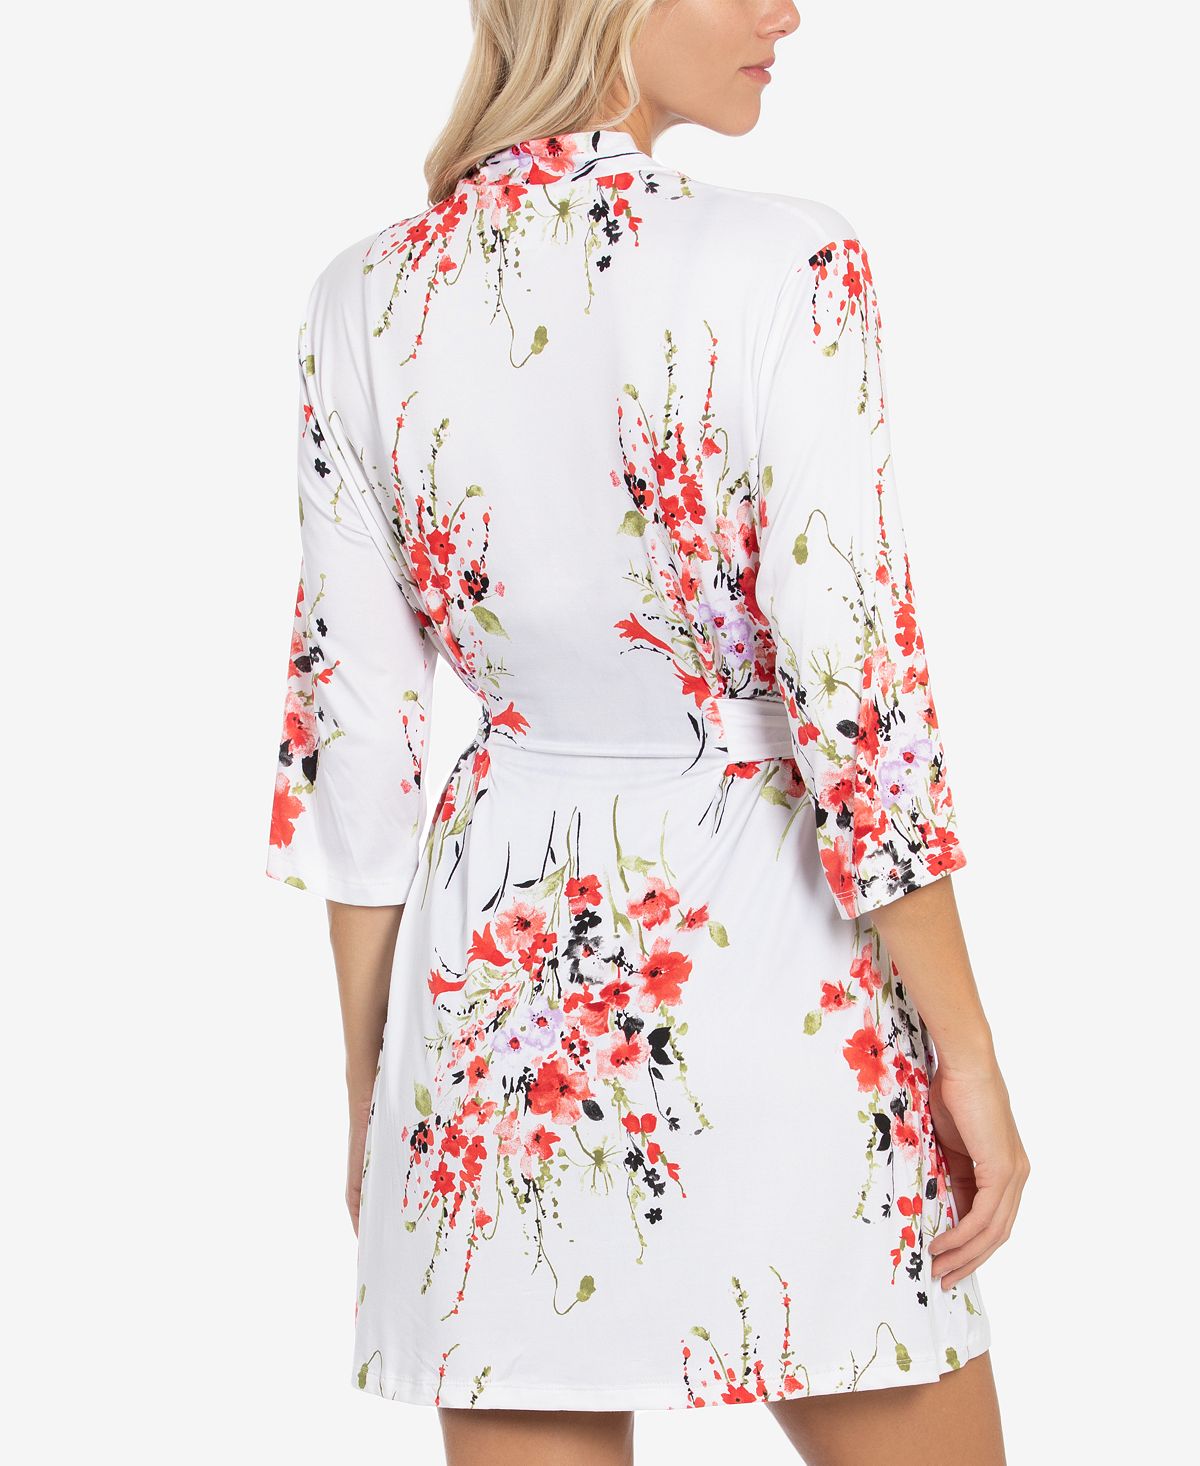 Linea Donatella Floral-print Chemise Nightgown & Wrap Robe Set Iroy Black